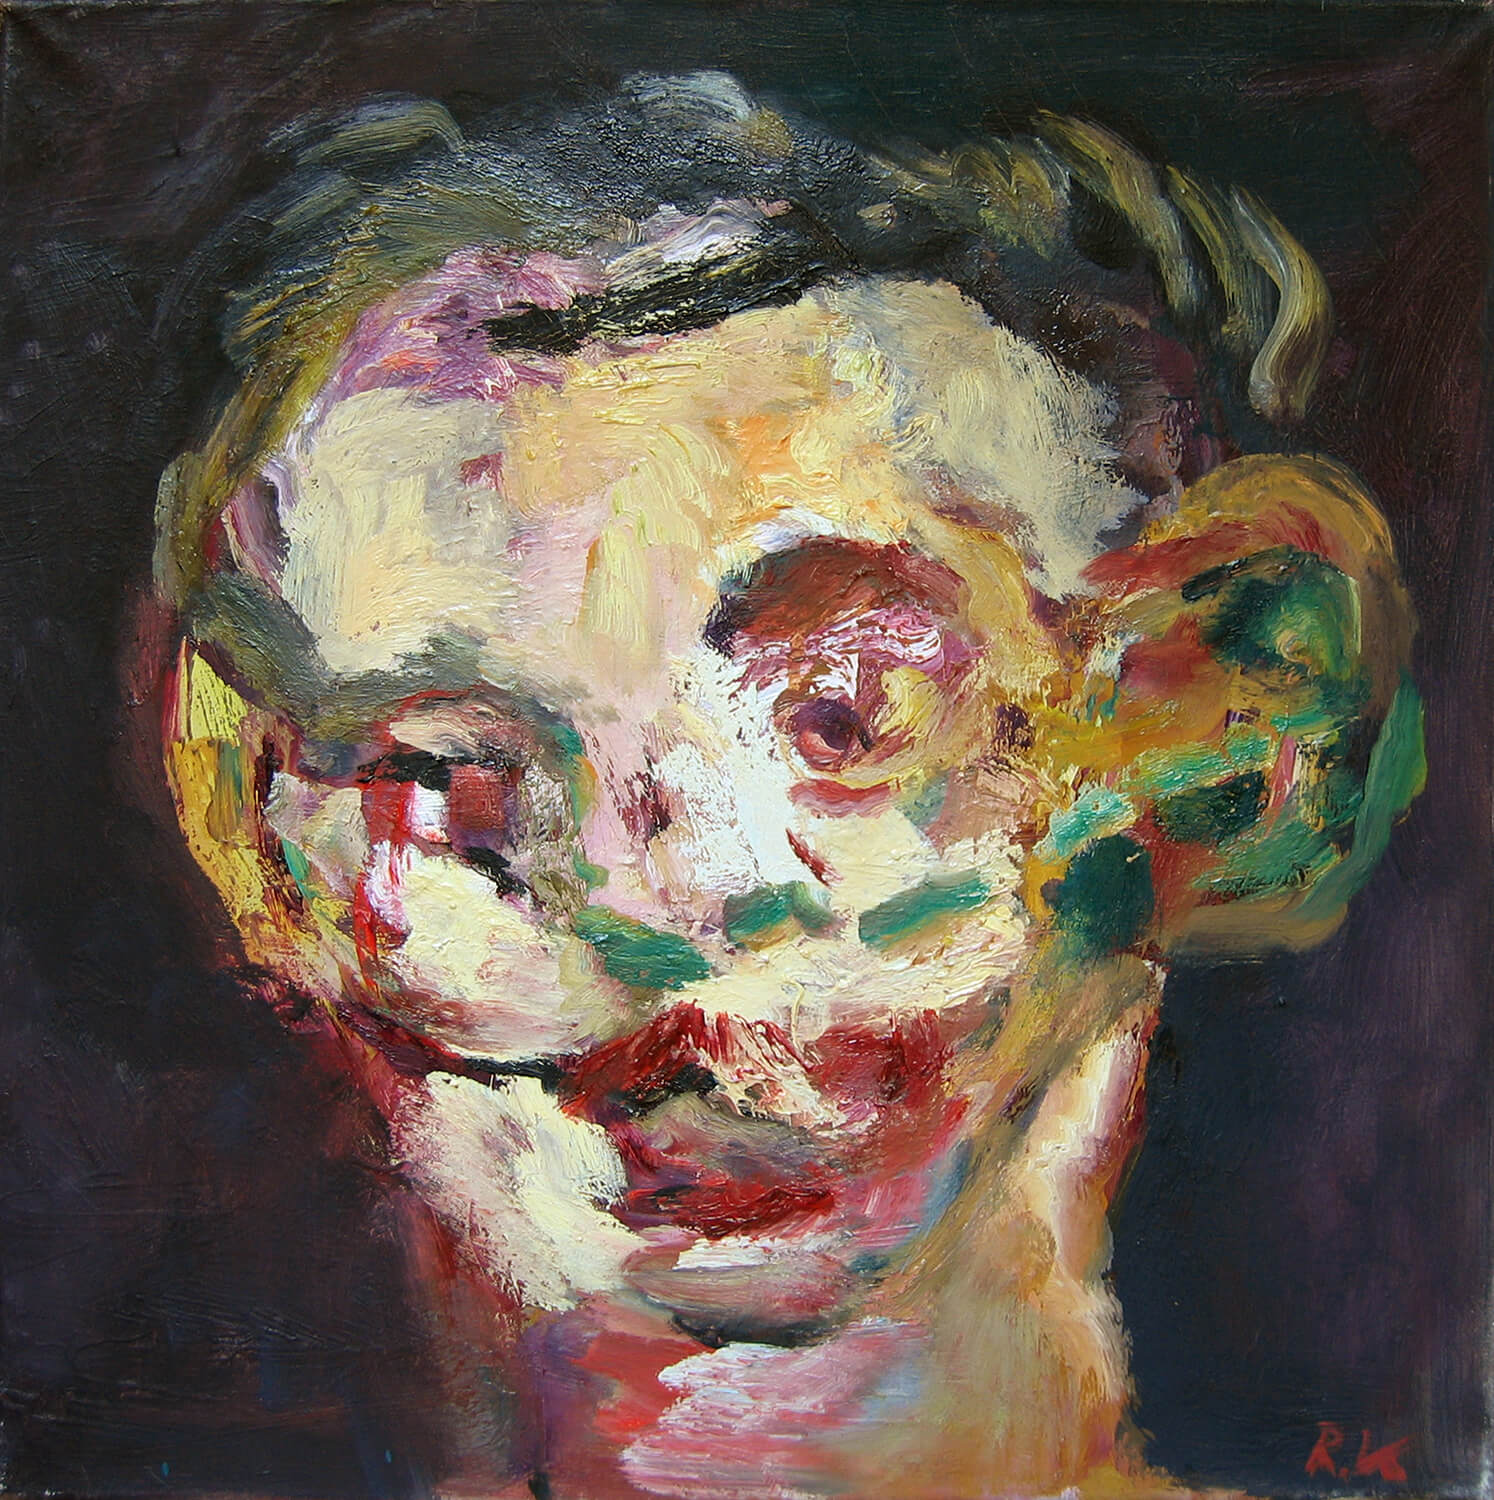 Ralf Kerbach, Self No. 2, 1990, oil on canvas, 50 x 50 cm